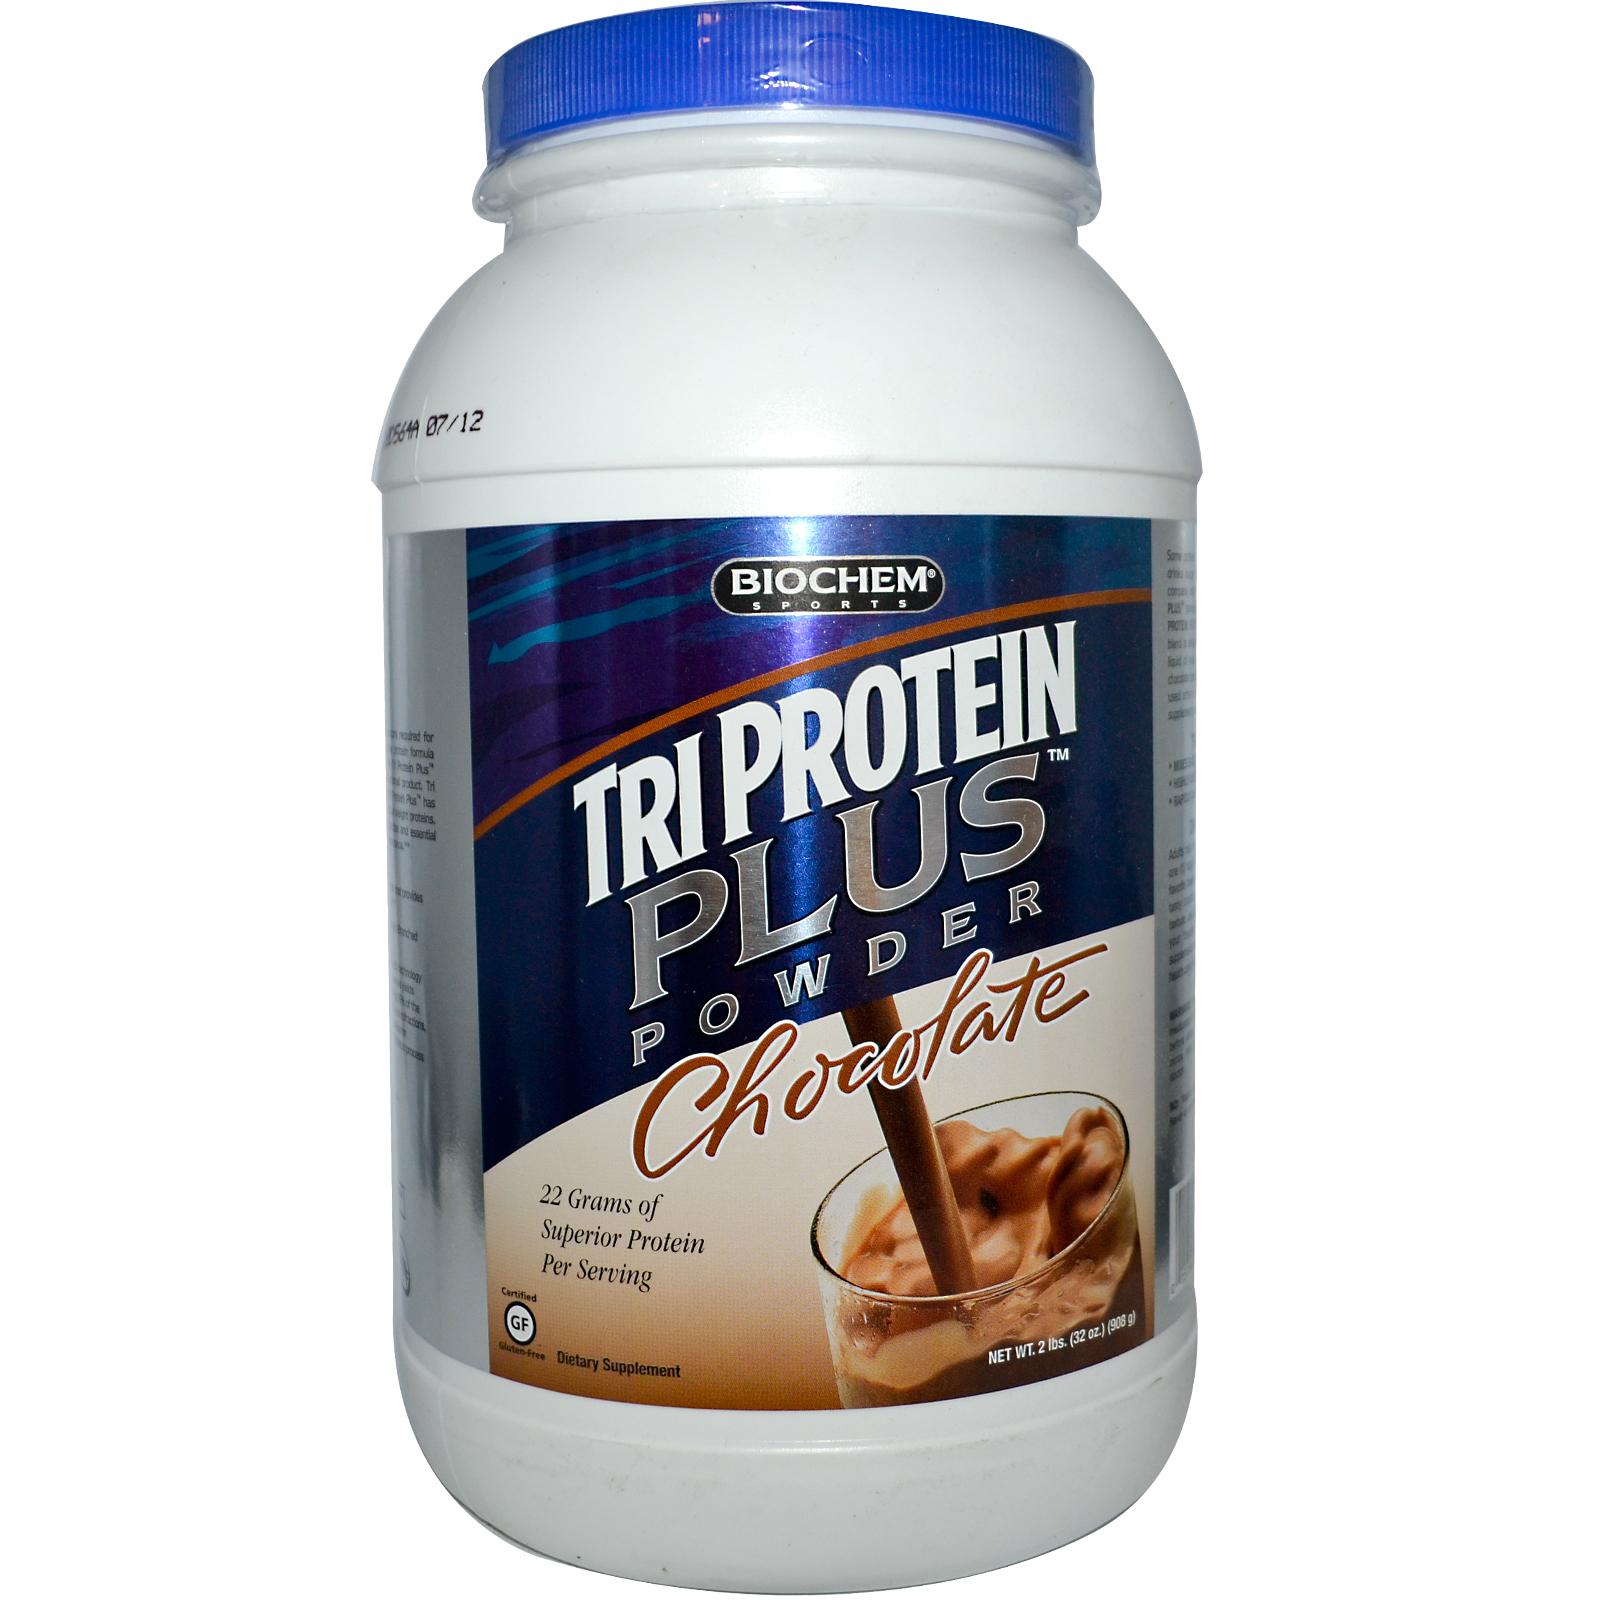 Tri Protein Plus Chocolate